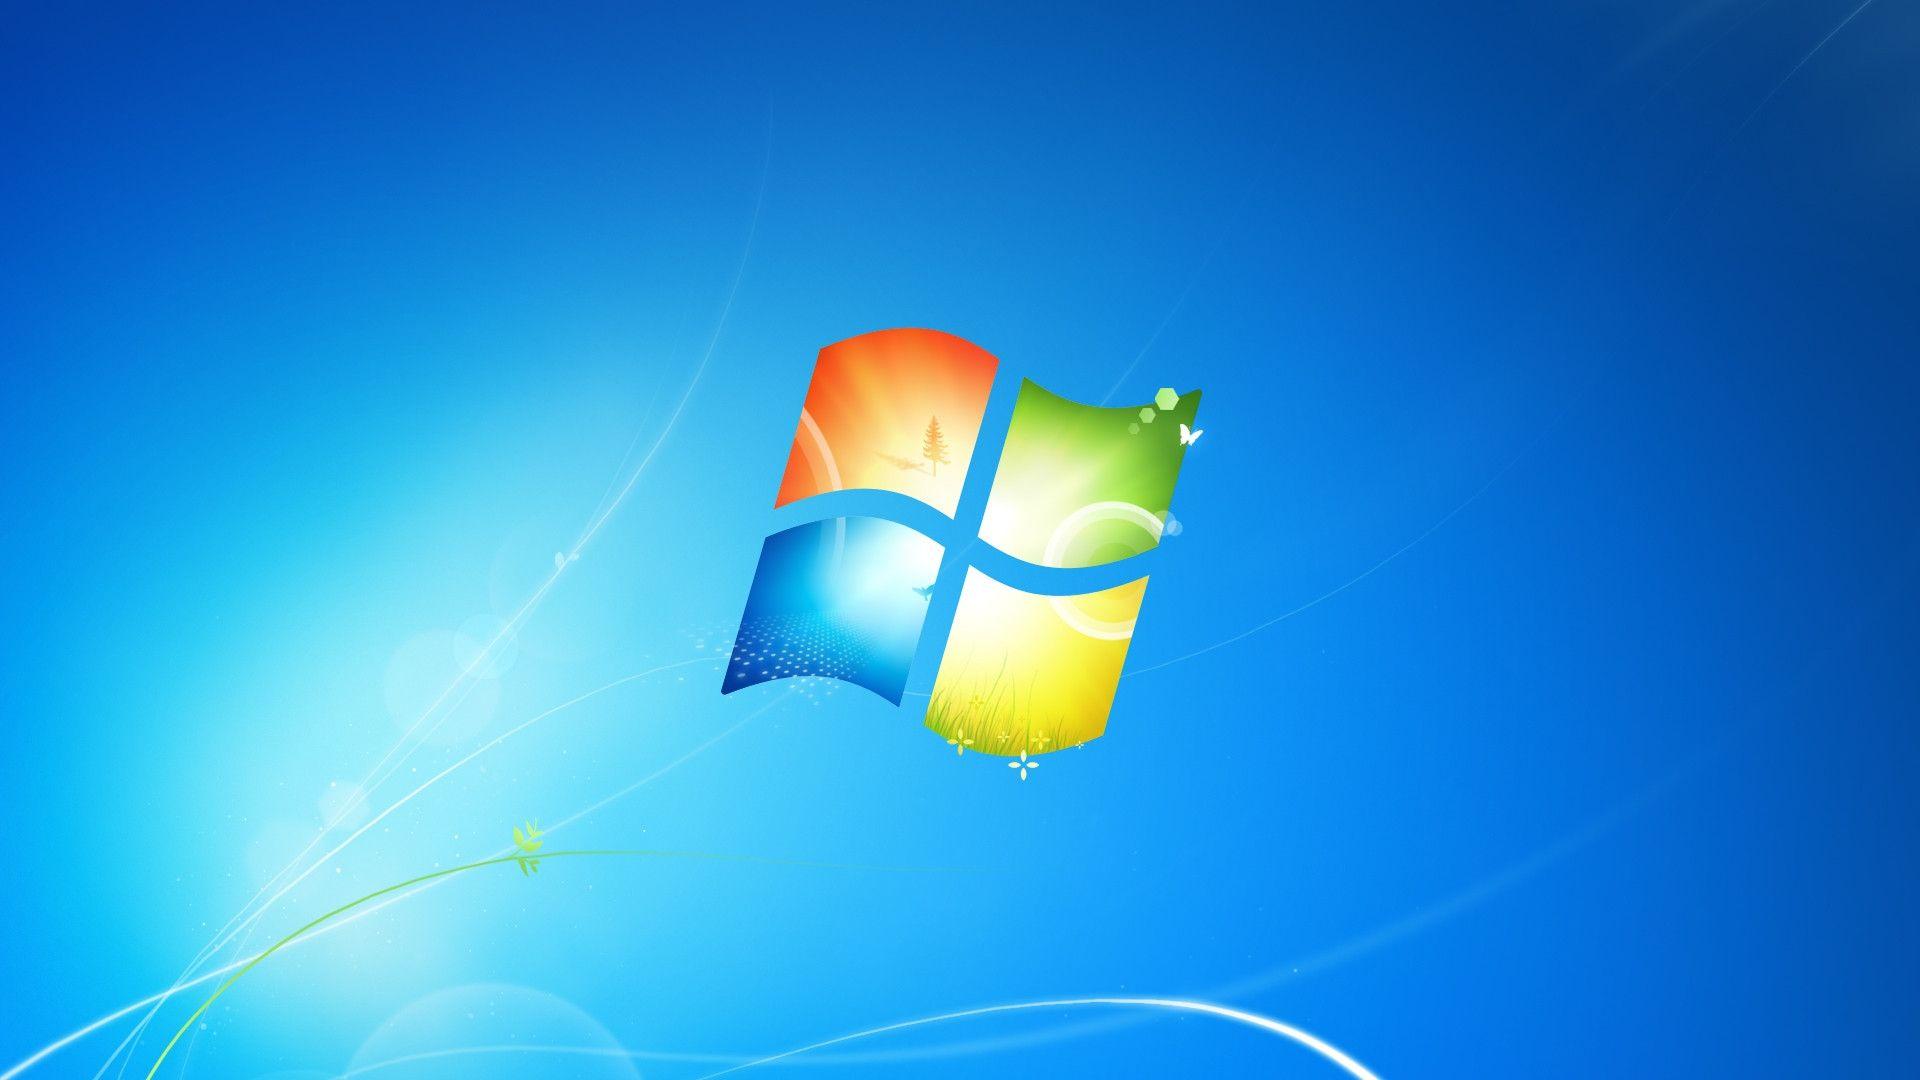 Windows Desktop Background 1 20166 HD Wallpaper. Wallroro